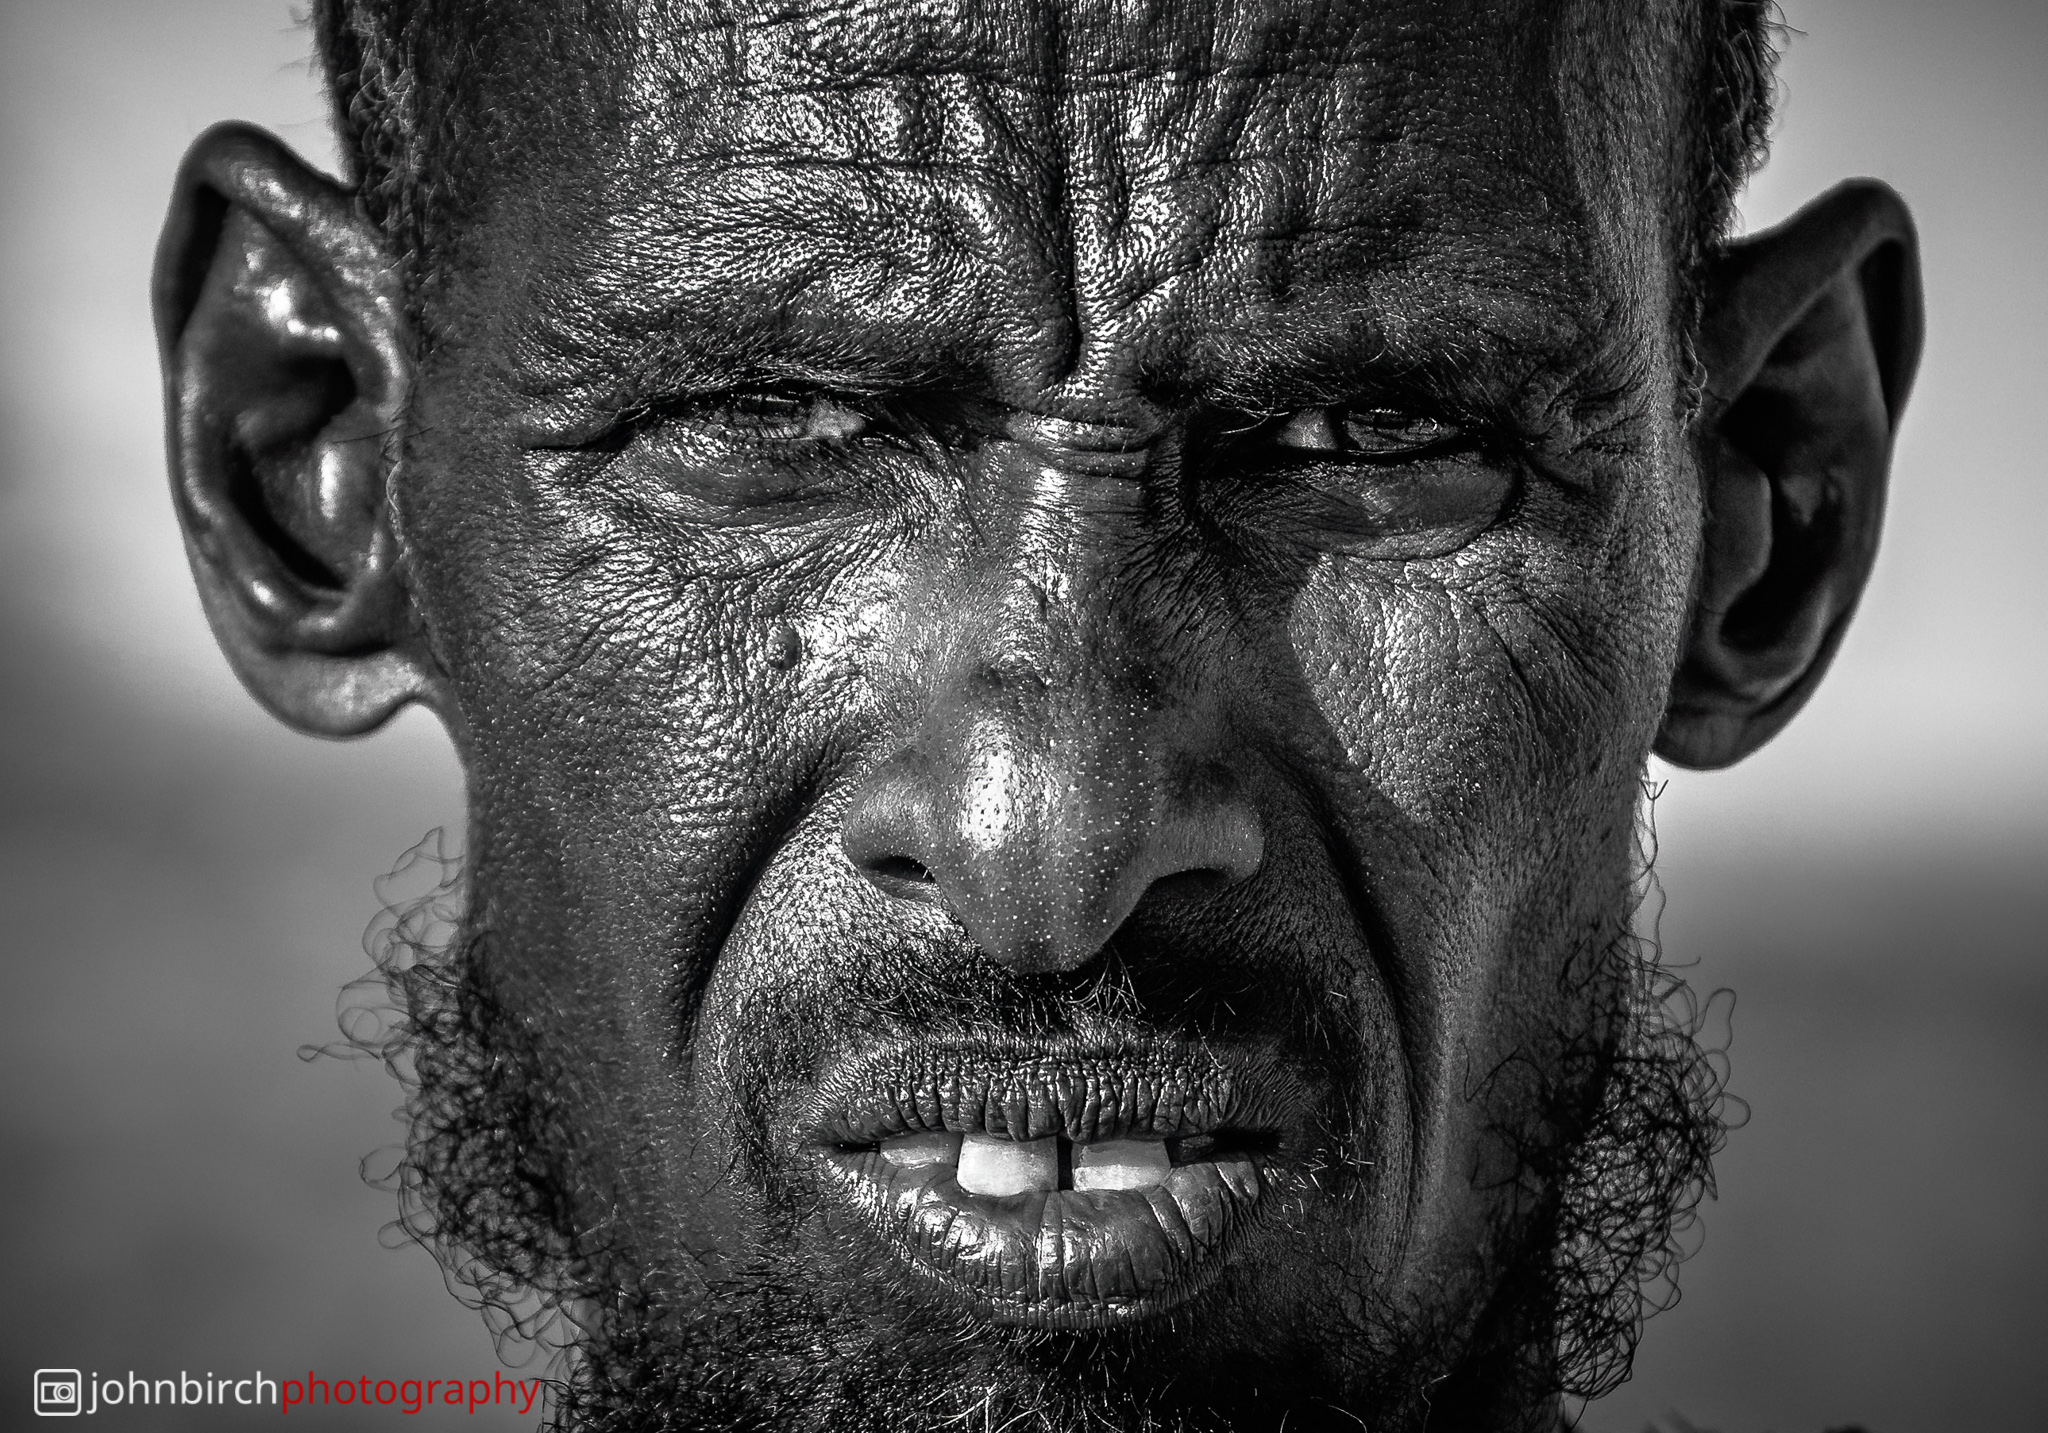 The Ethiopian Man